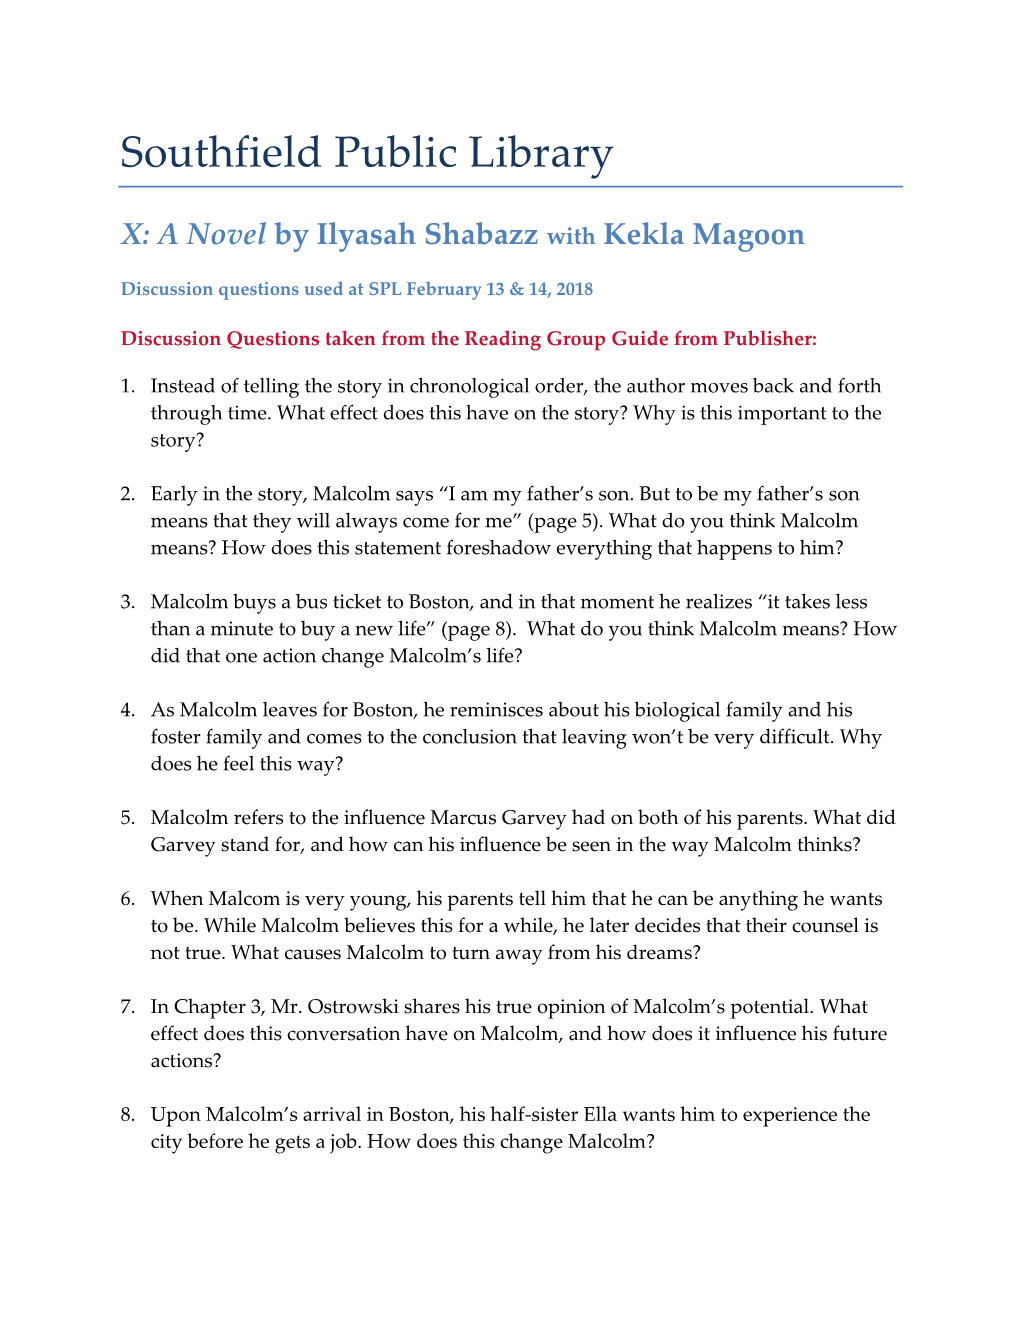 A Novel by Ilyasah Shabazz with Kekla Magoon